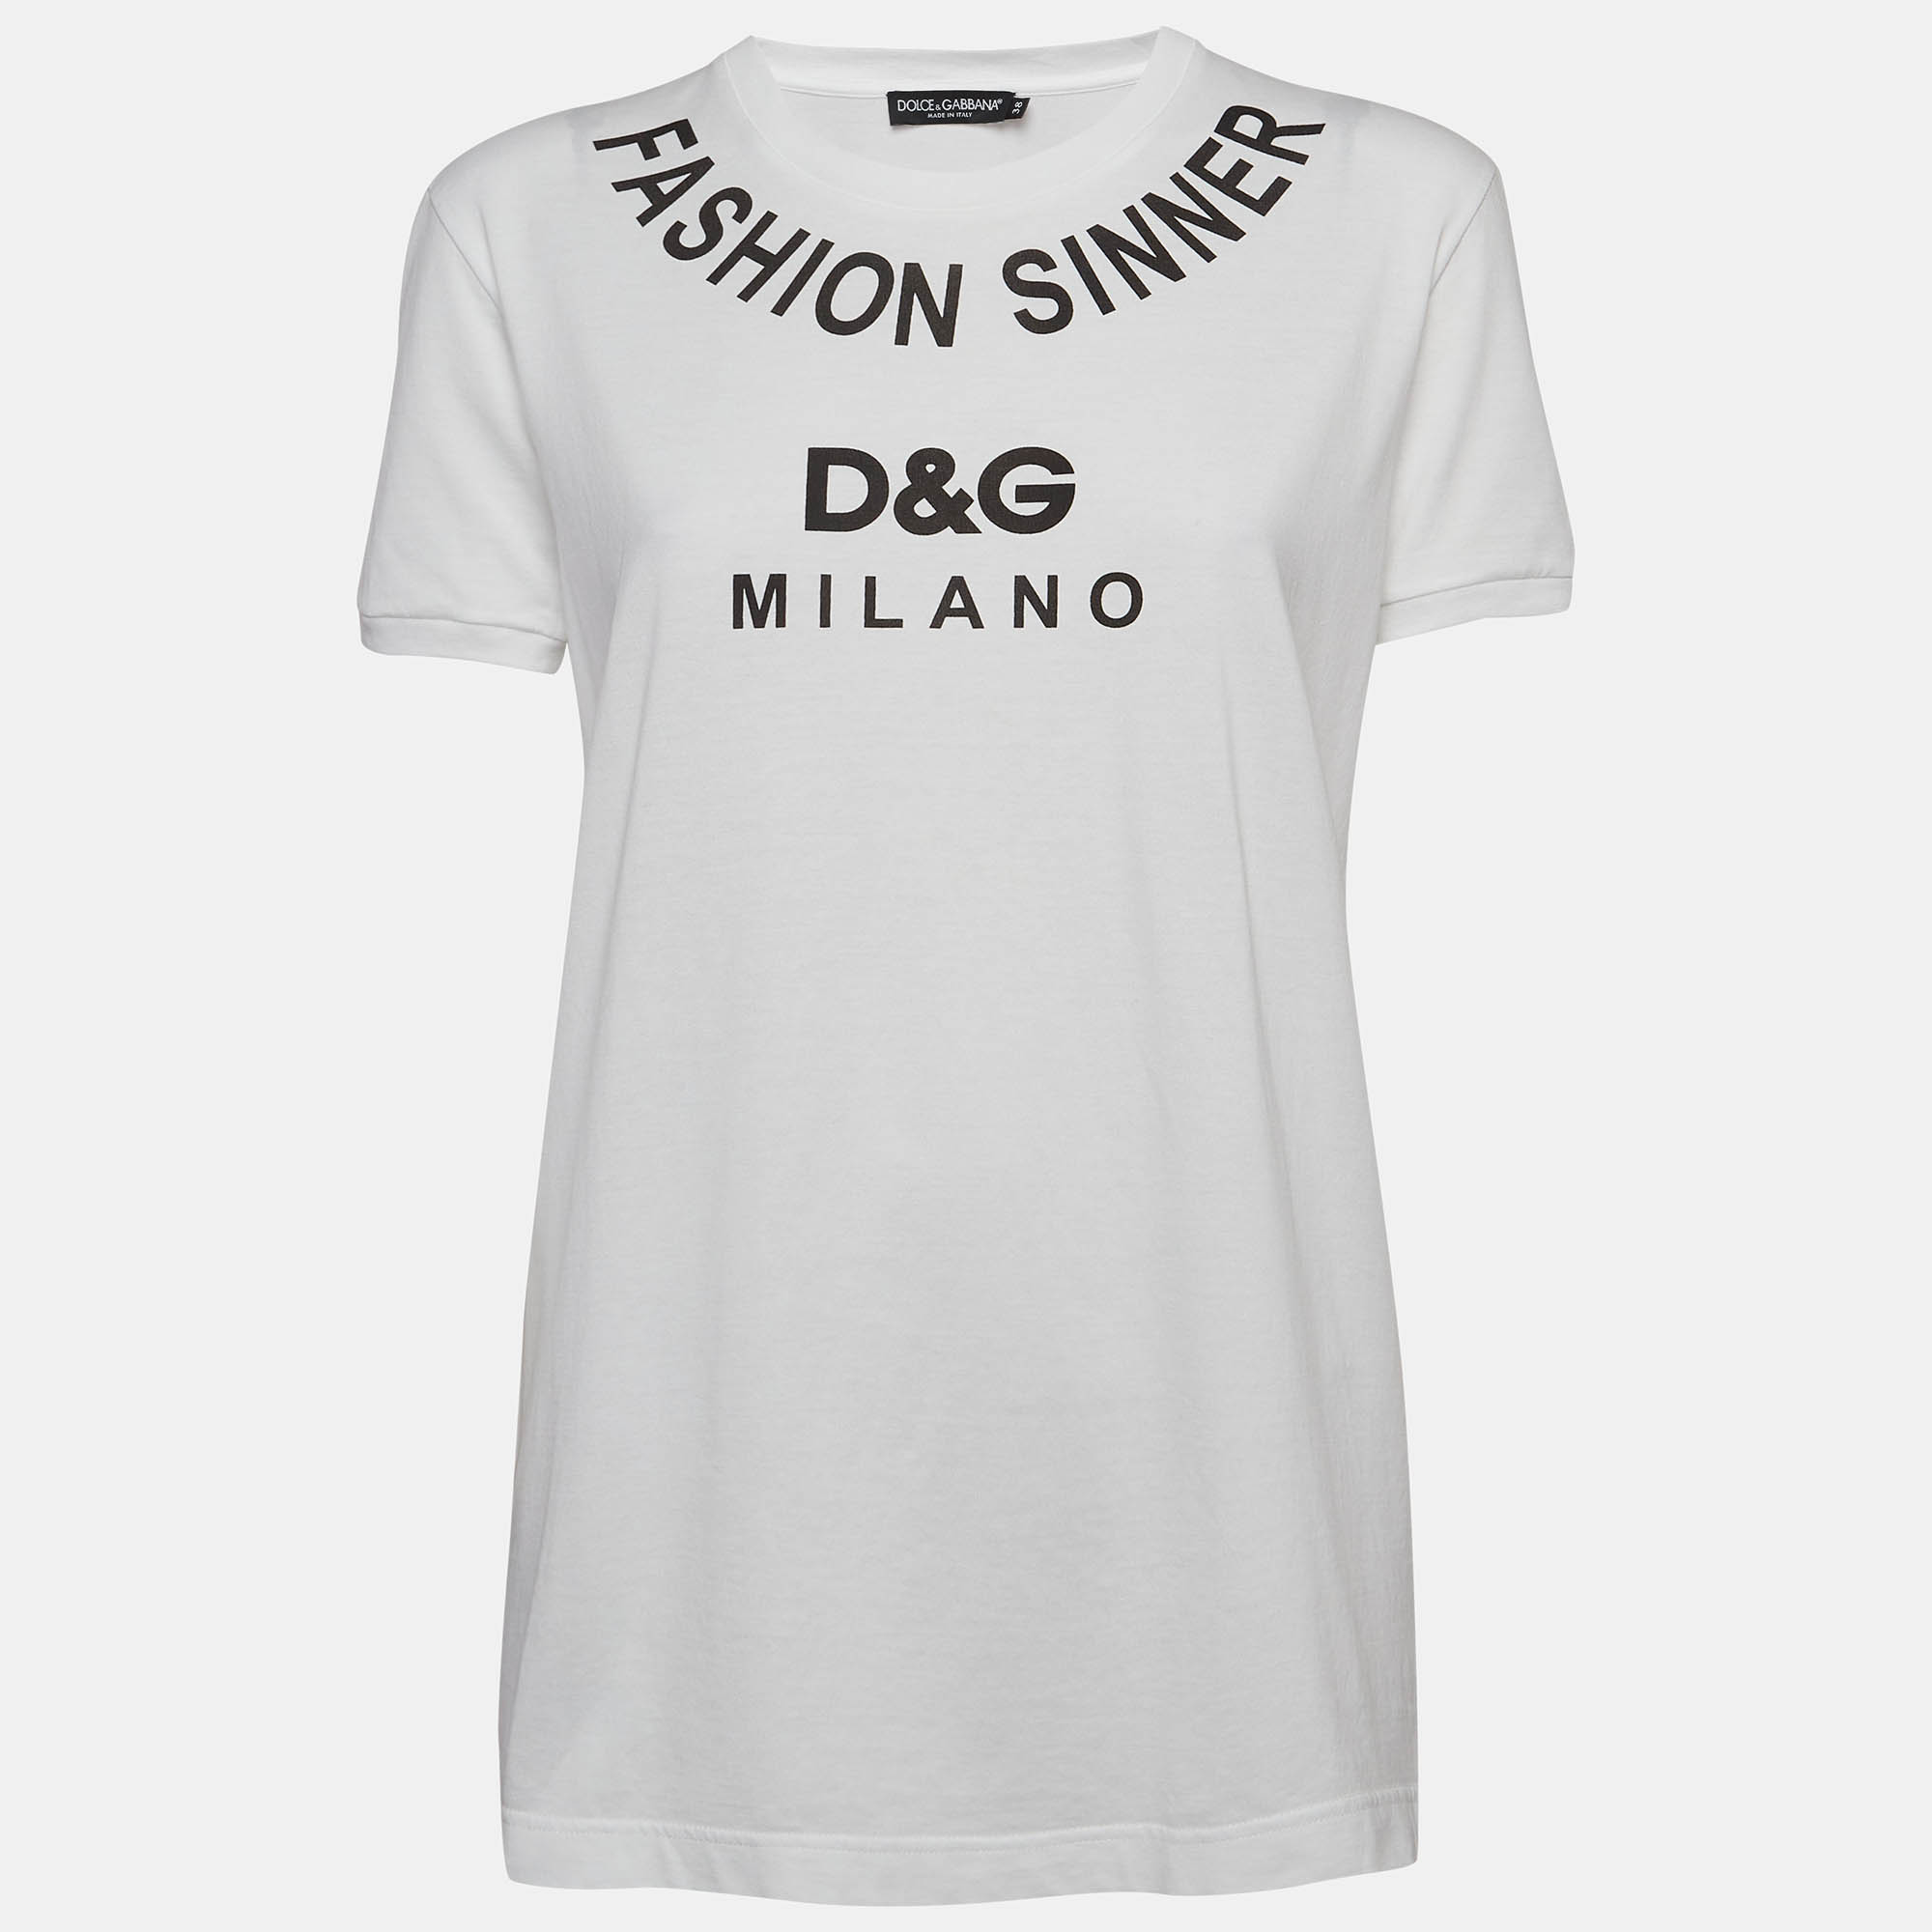 Dolce & gabbana logo printed cotton t-shirt s